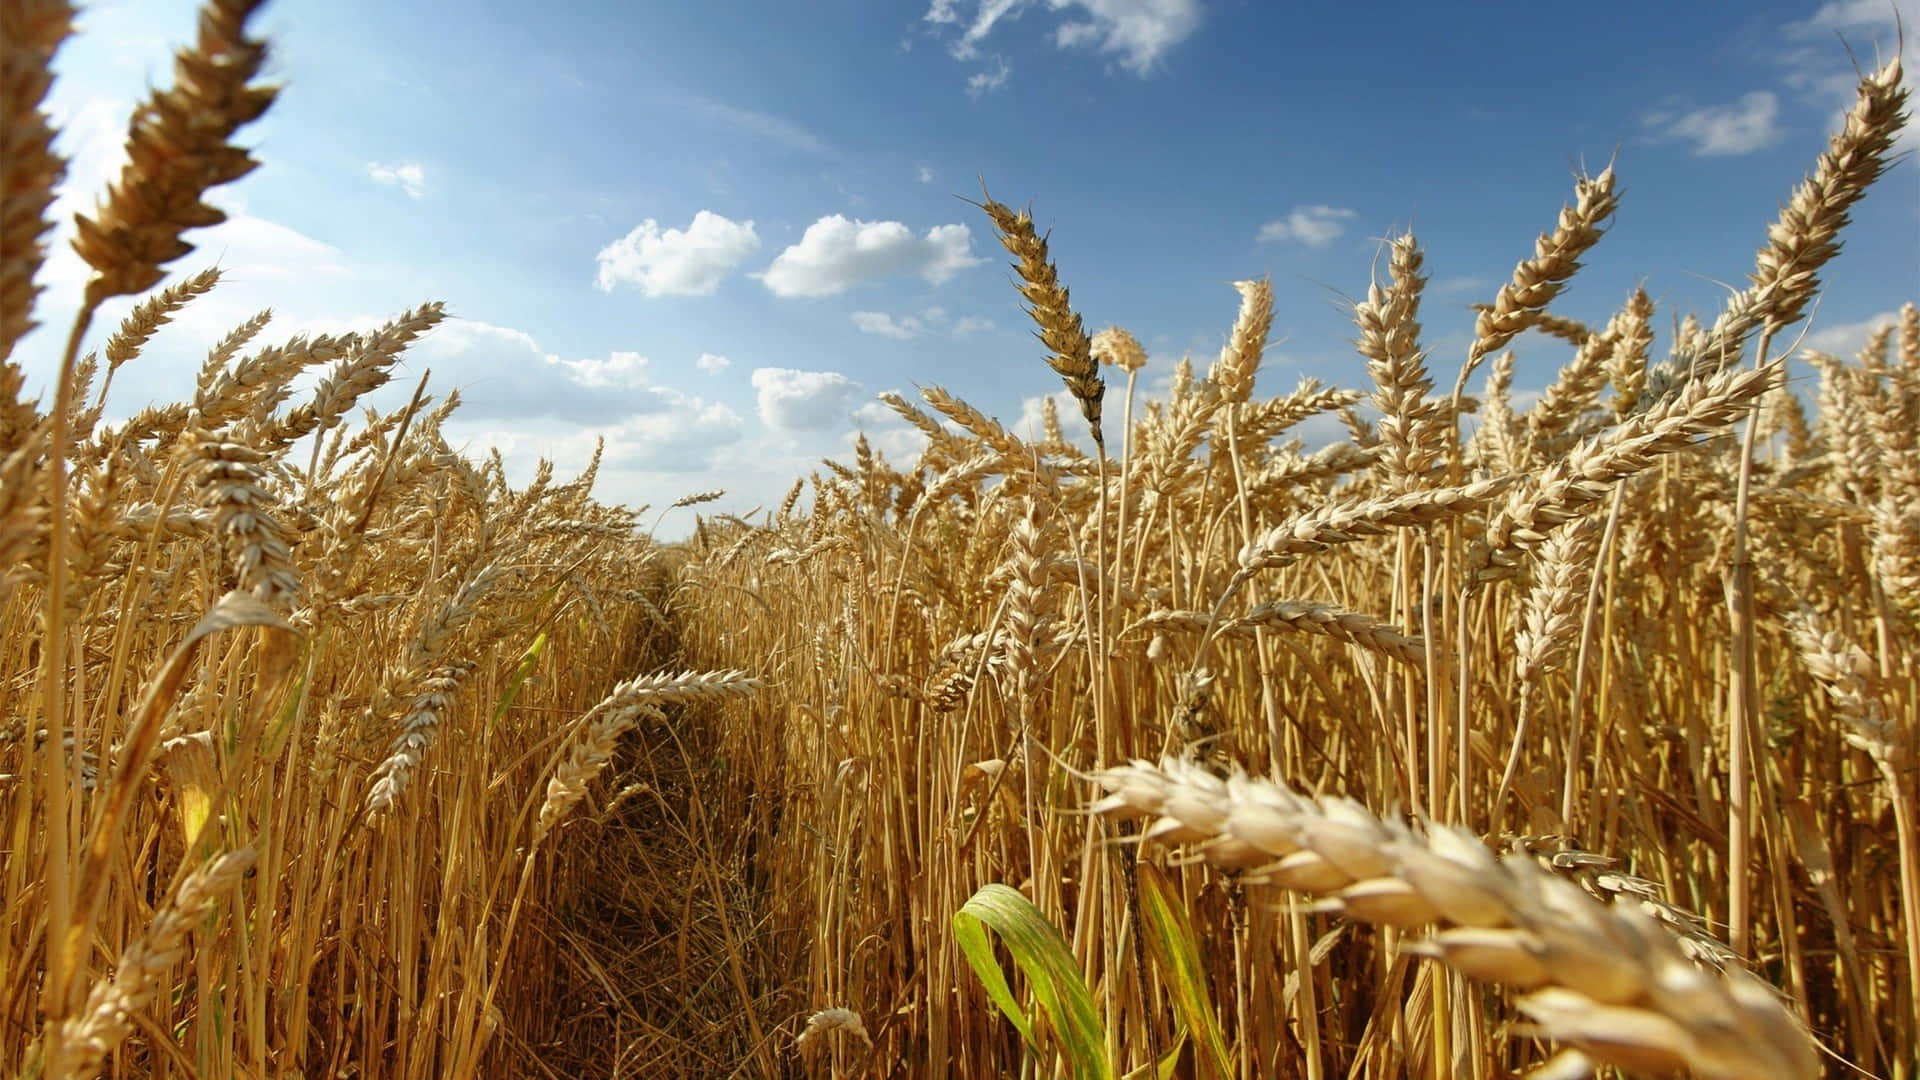 Golden Wheat Field Under Blue Sky Wallpaper